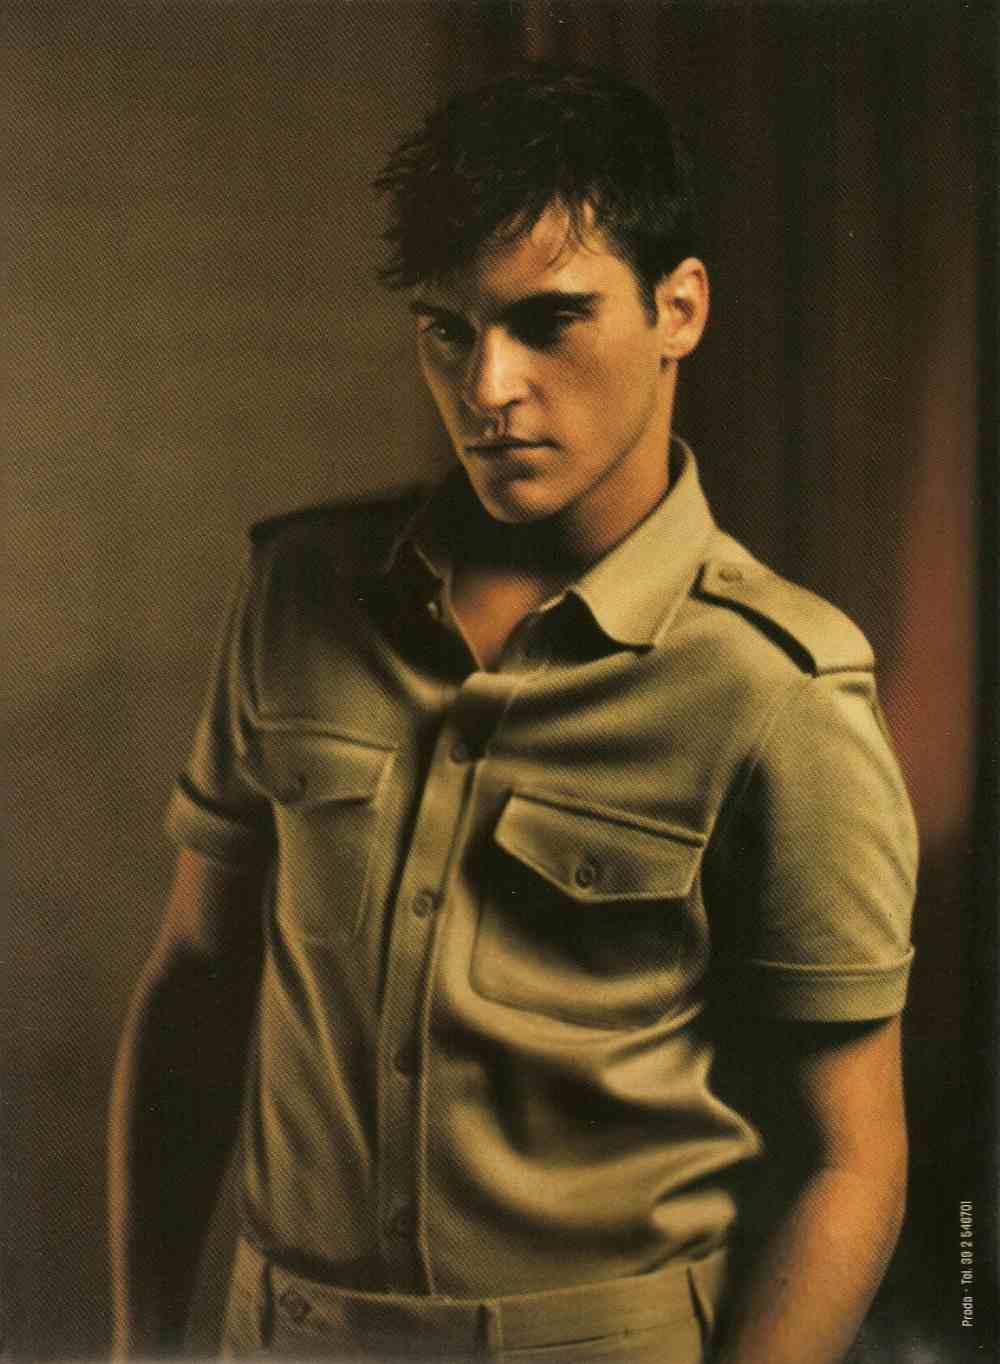 PRADA - Men's S/S 1997
Photographer: Glen Luchford
Model: Joaquin Phoenix
Stylist: David Bradshaw
Location: Milan - Italy